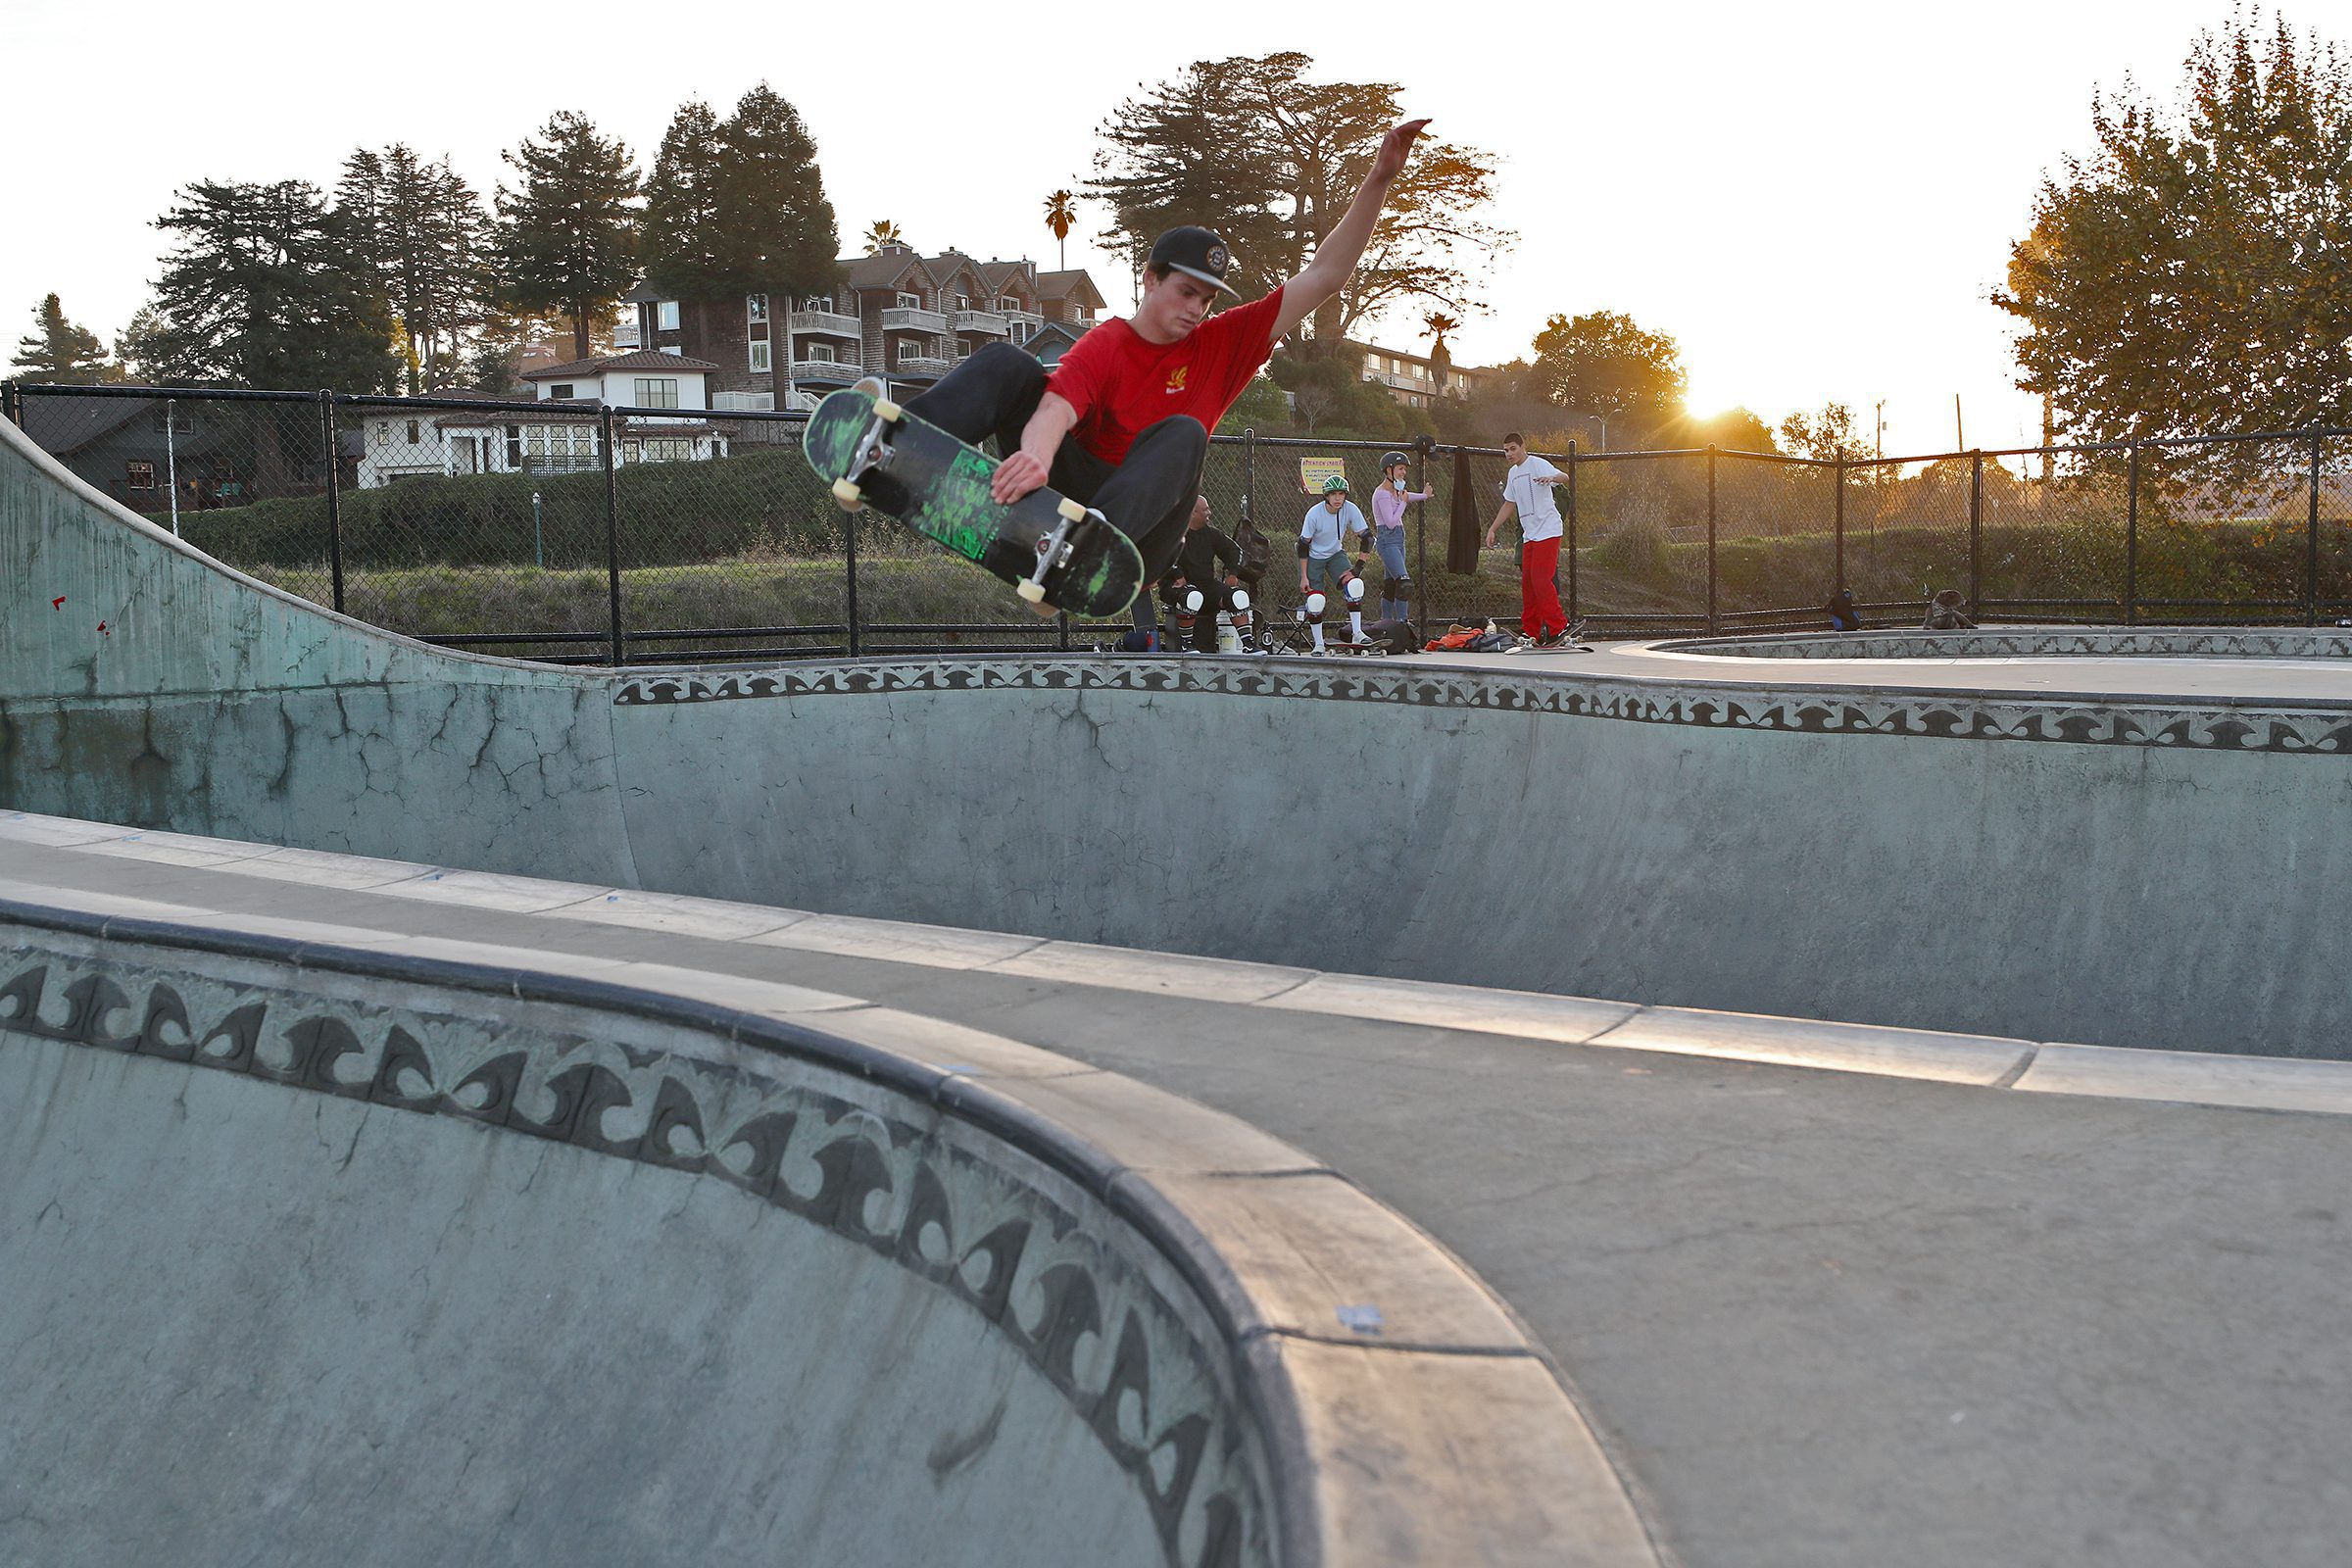 Skateboarder Nikki Rodger catching air at Mike Fox Skate Park in Santa Cruz, CA